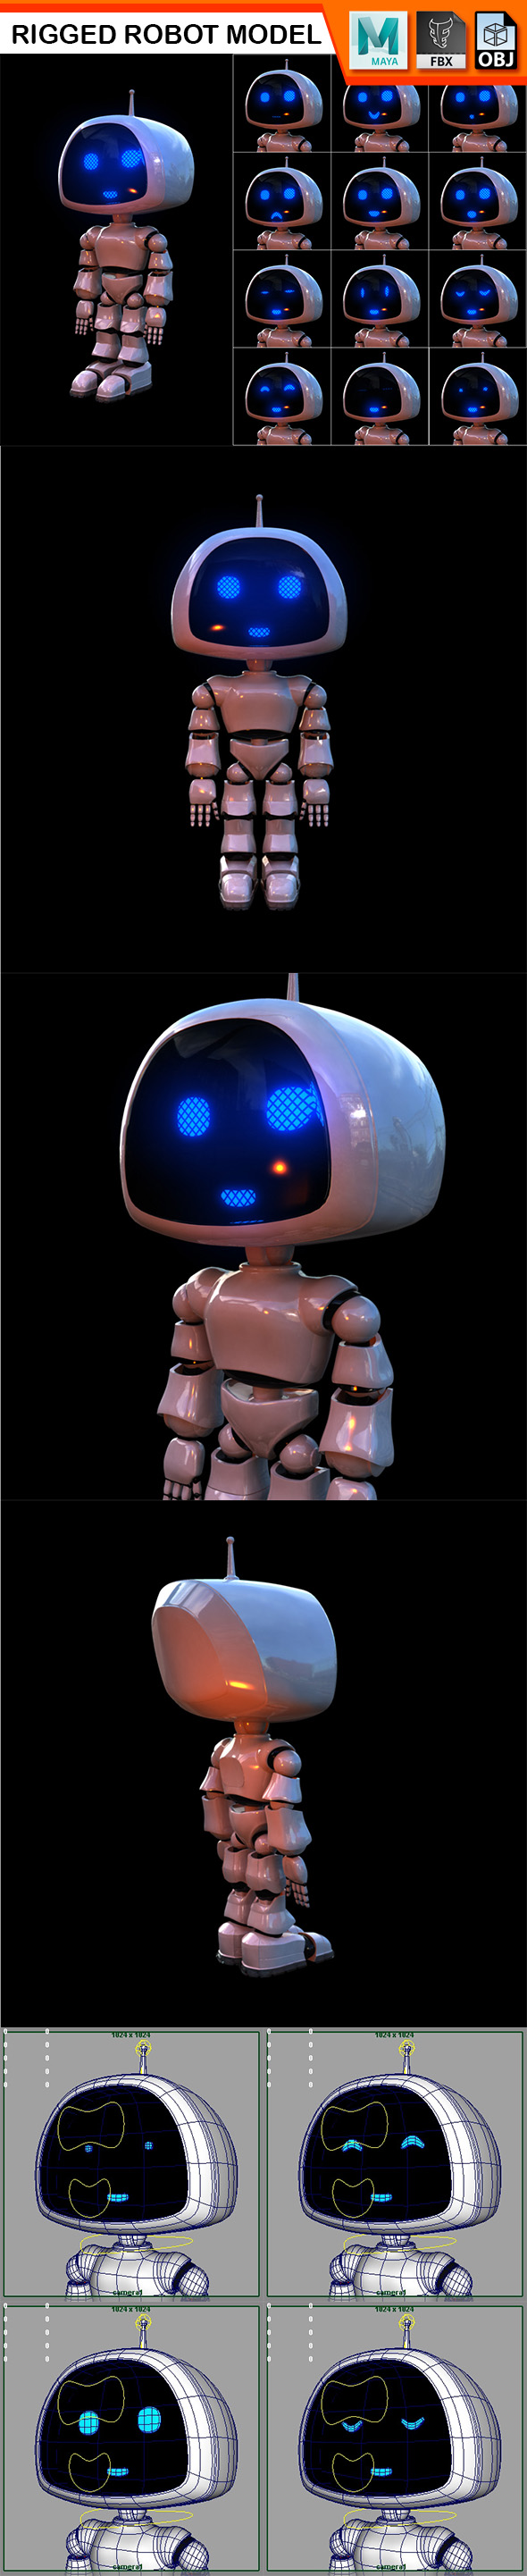 Rigged Robot Model - 3Docean 24843843